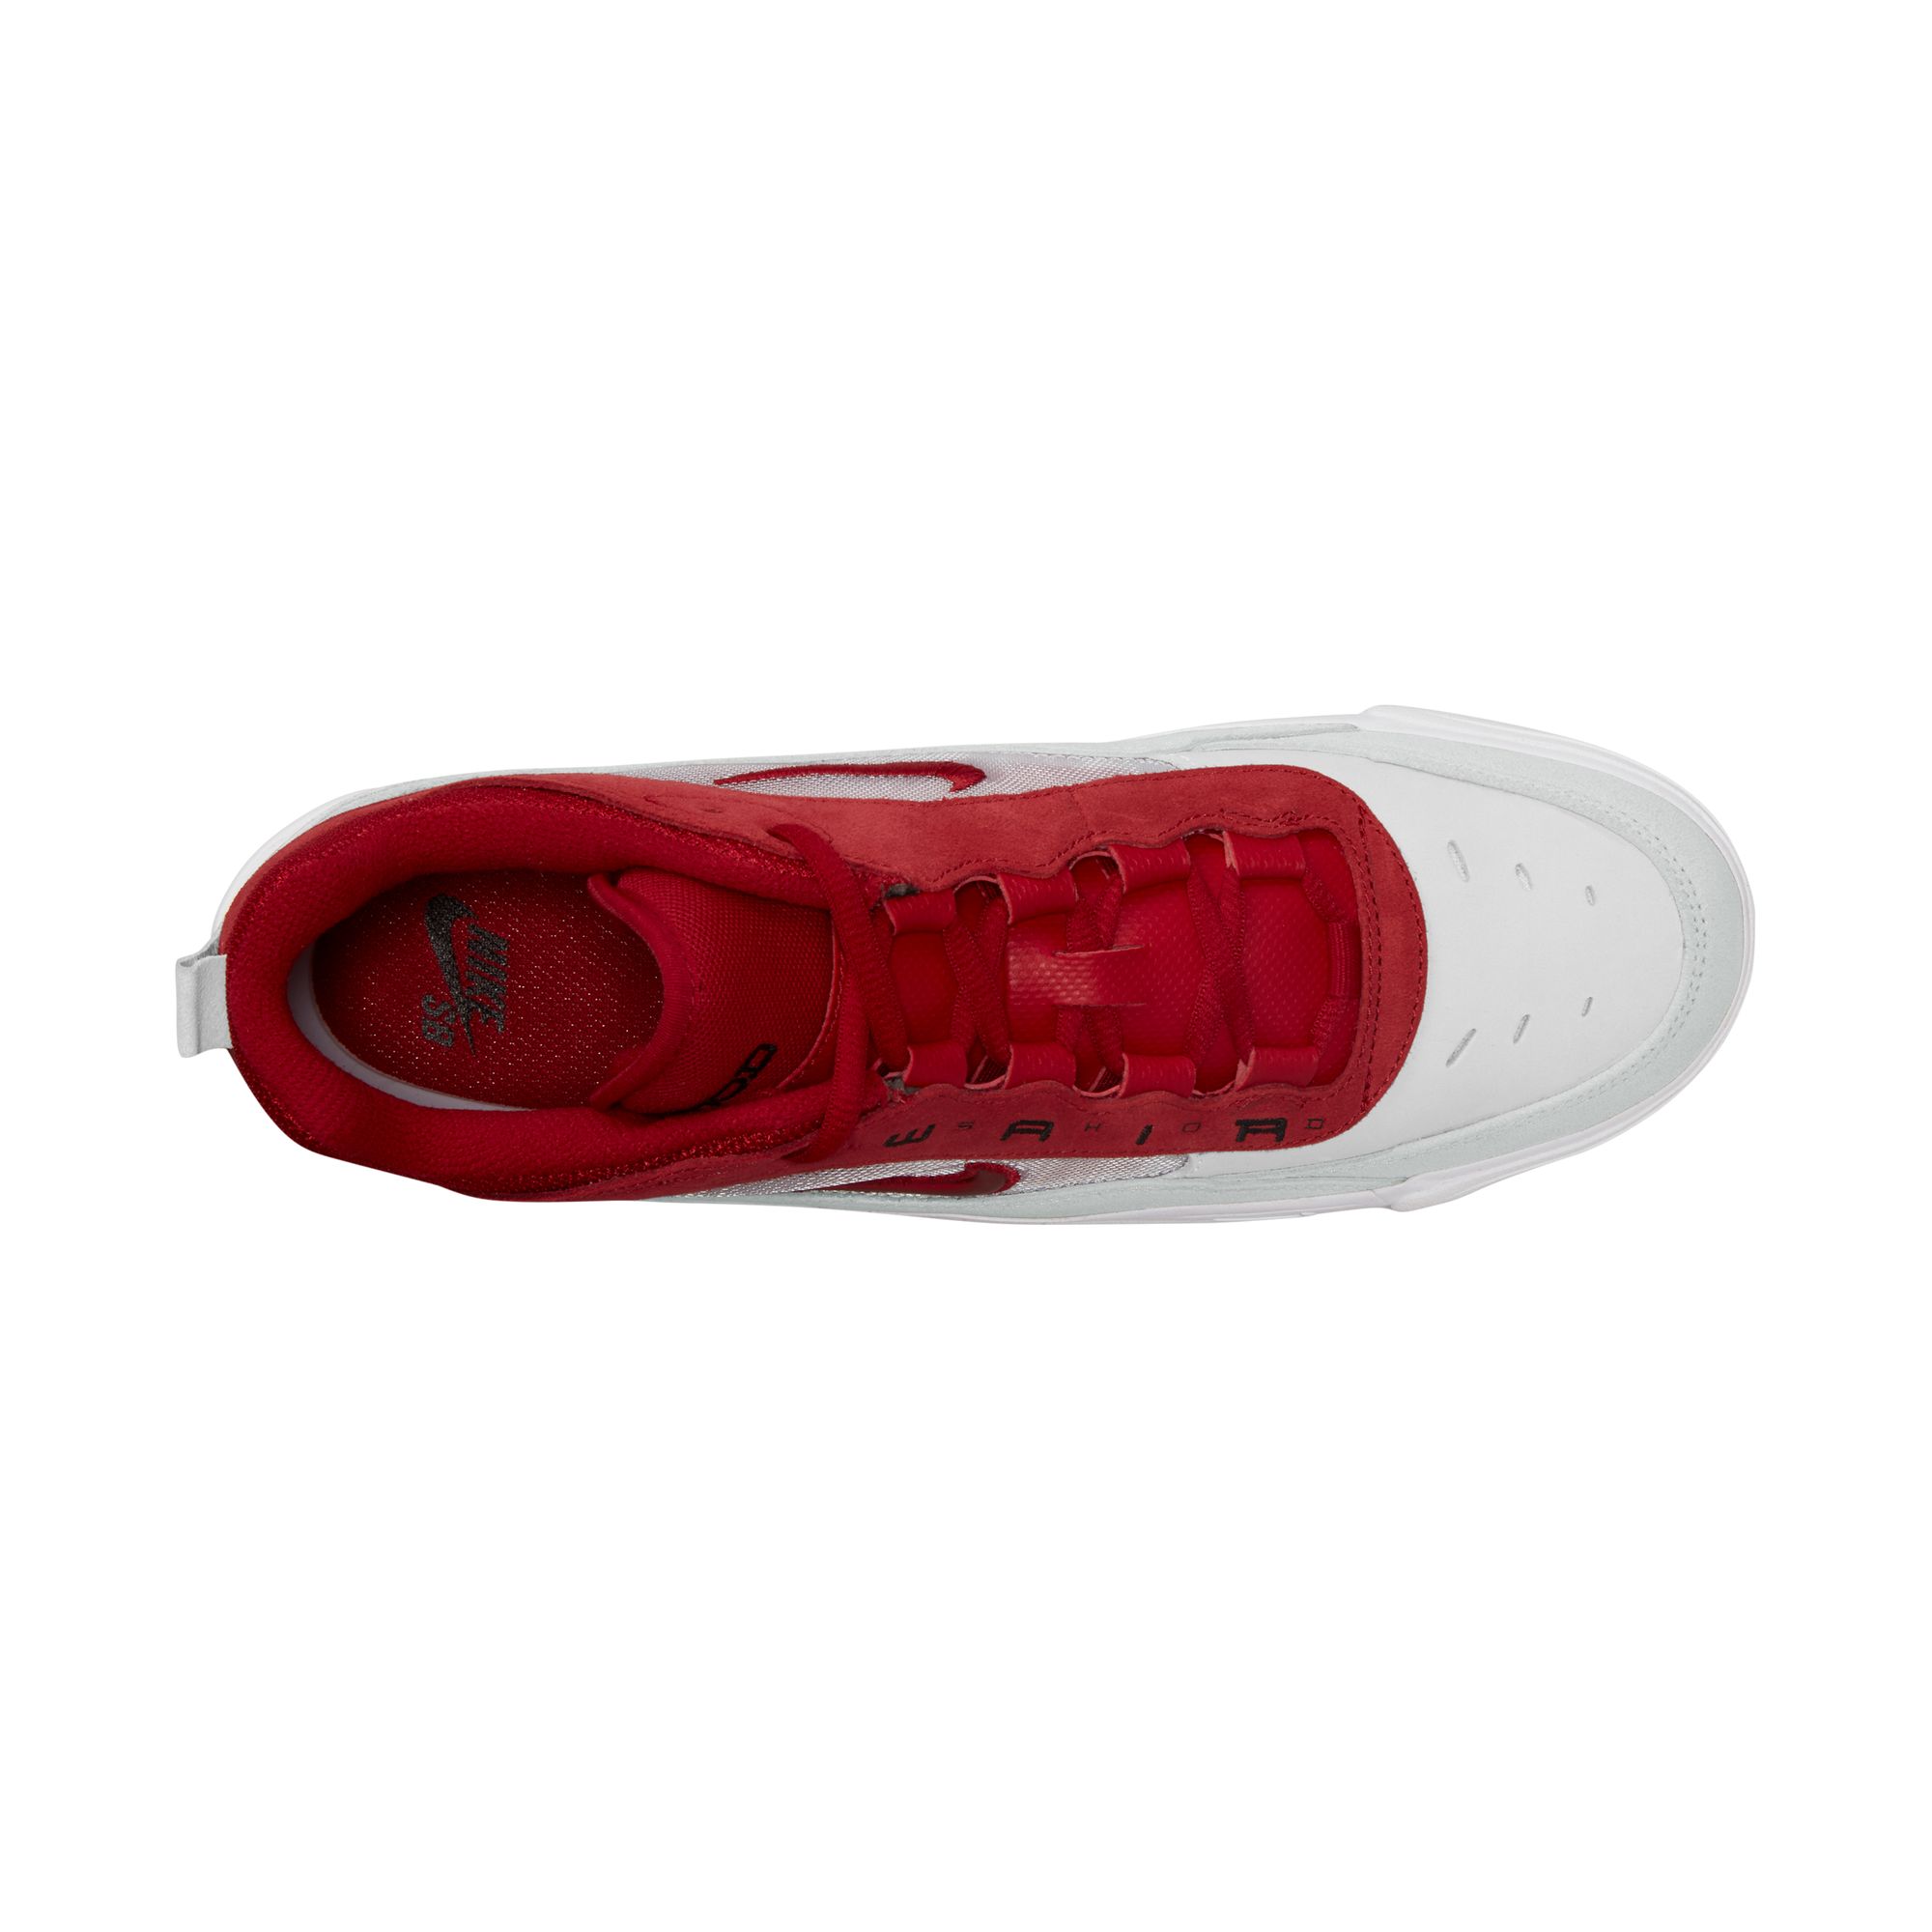 Nike SB Air Max Ishod 2 White/Varsity Red-Summit White